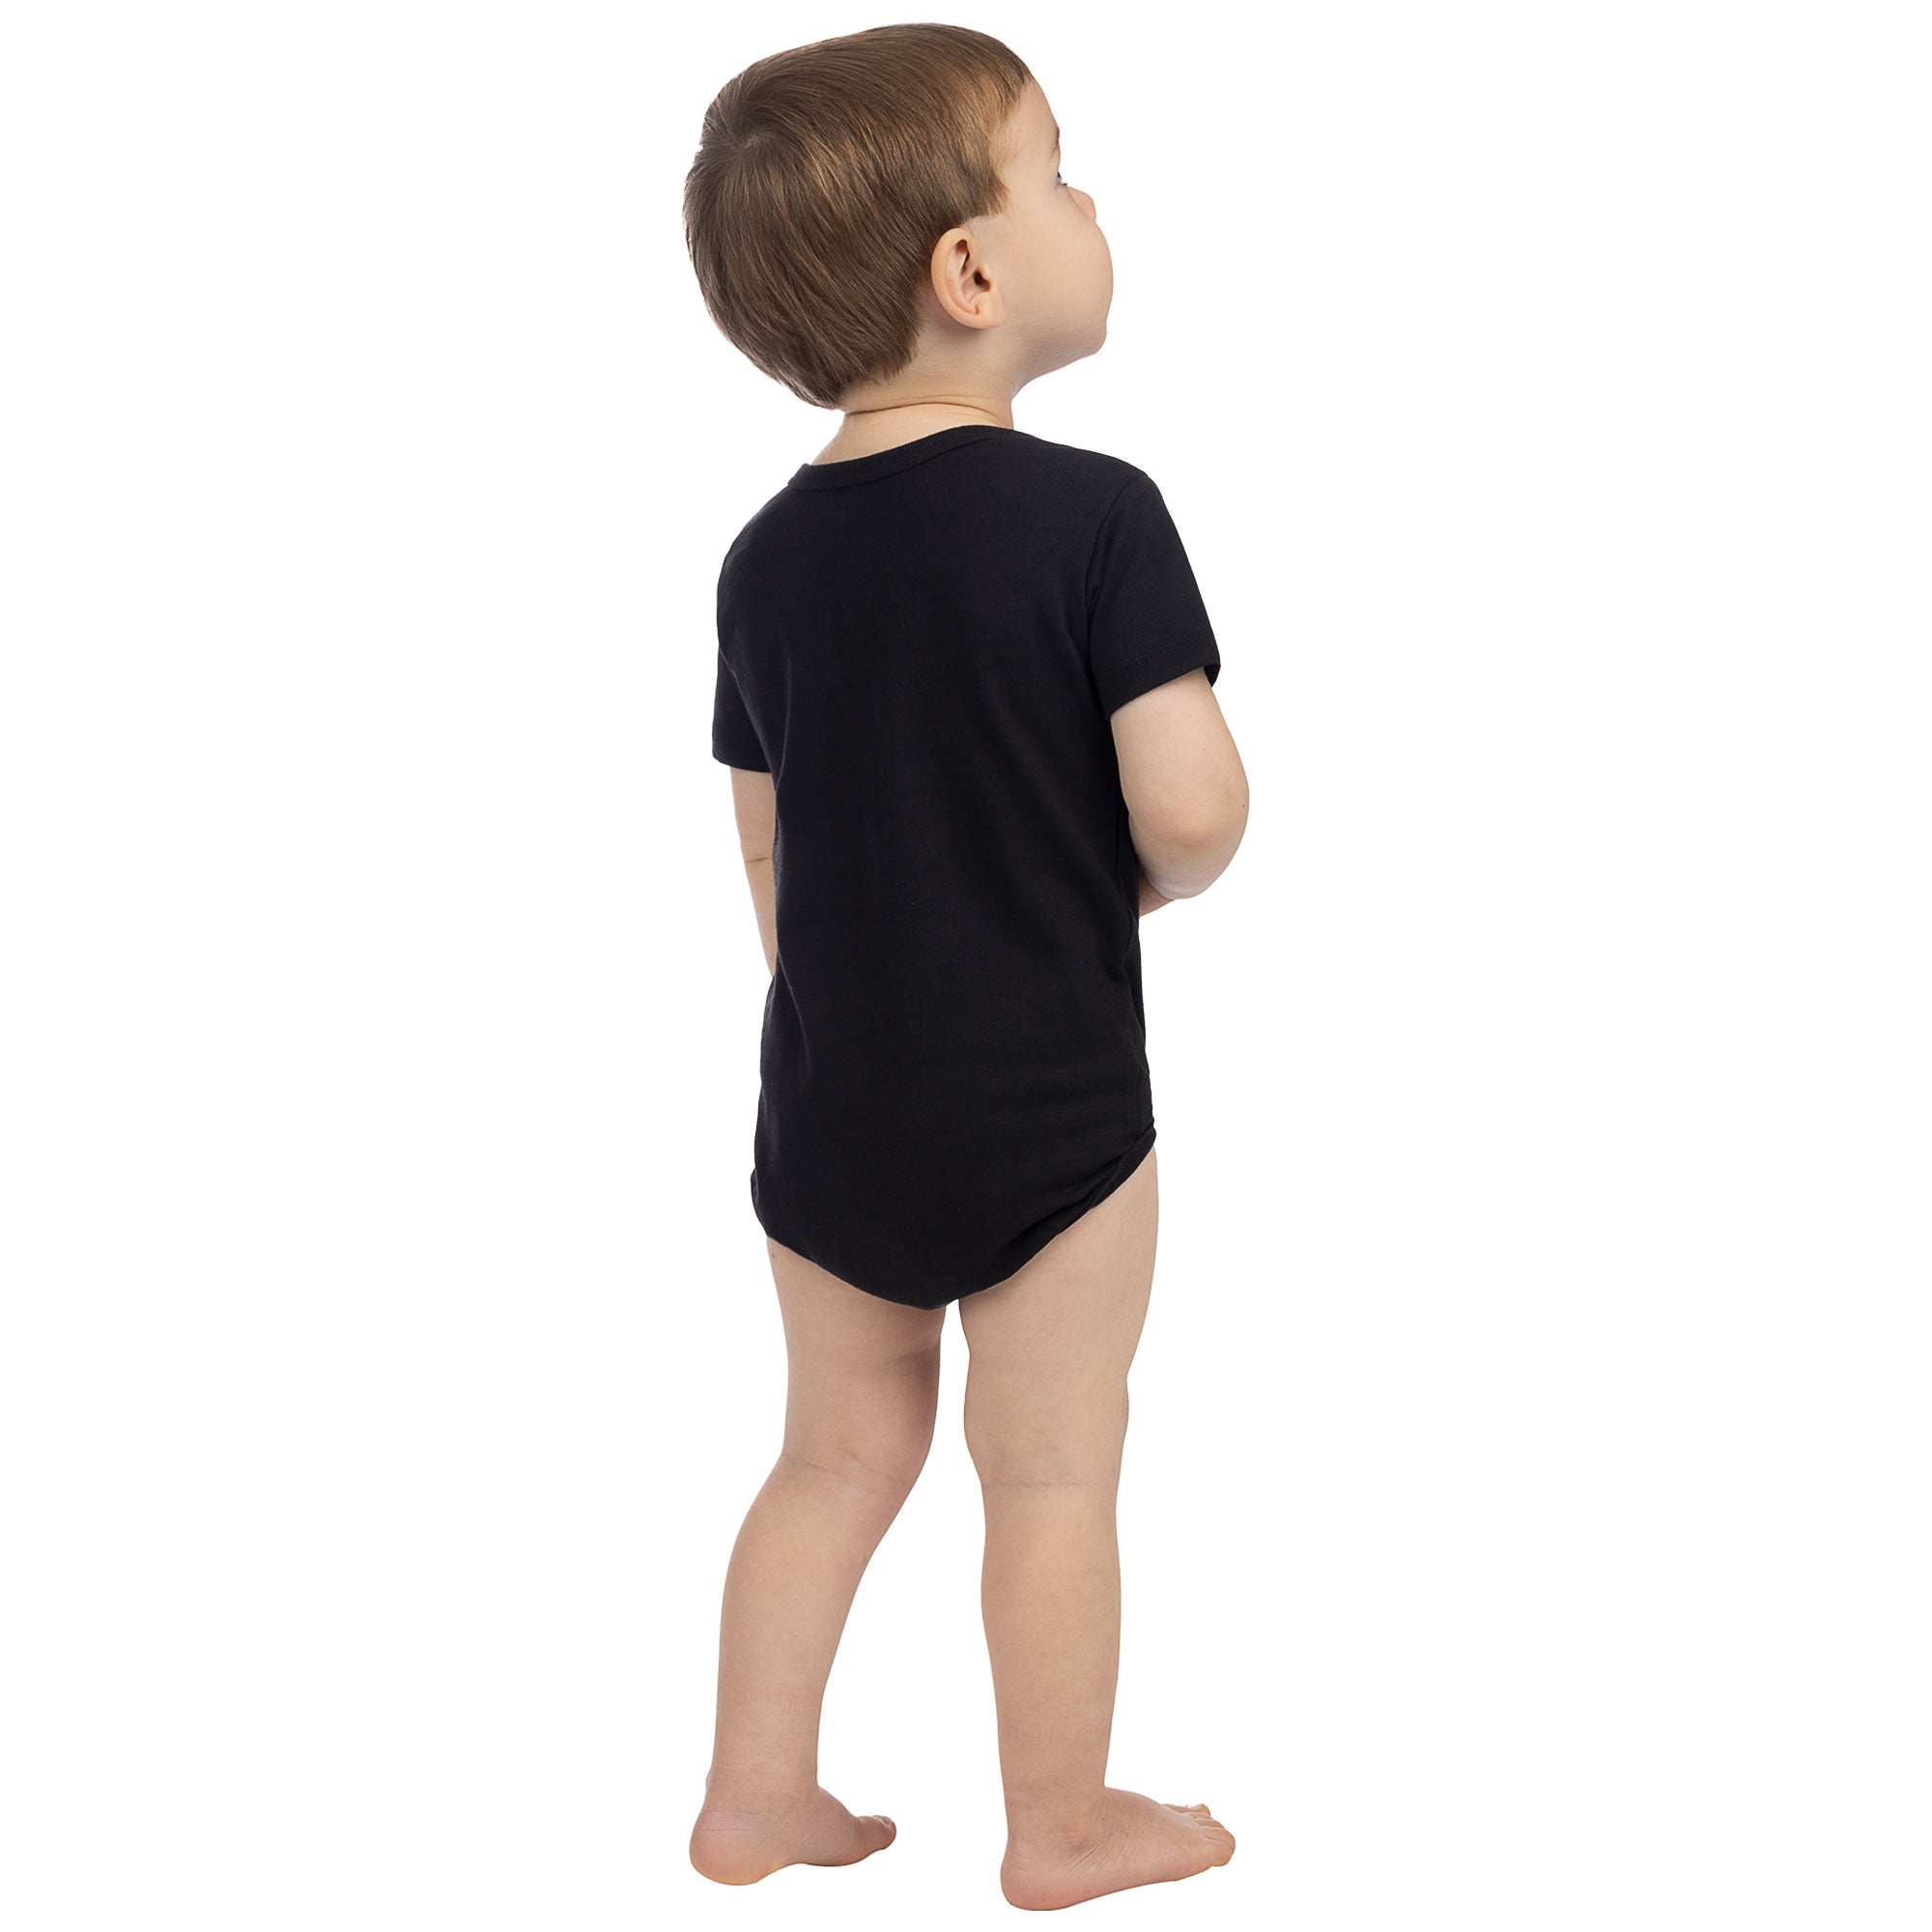 FXR Infant Podium S/S Bodysuit